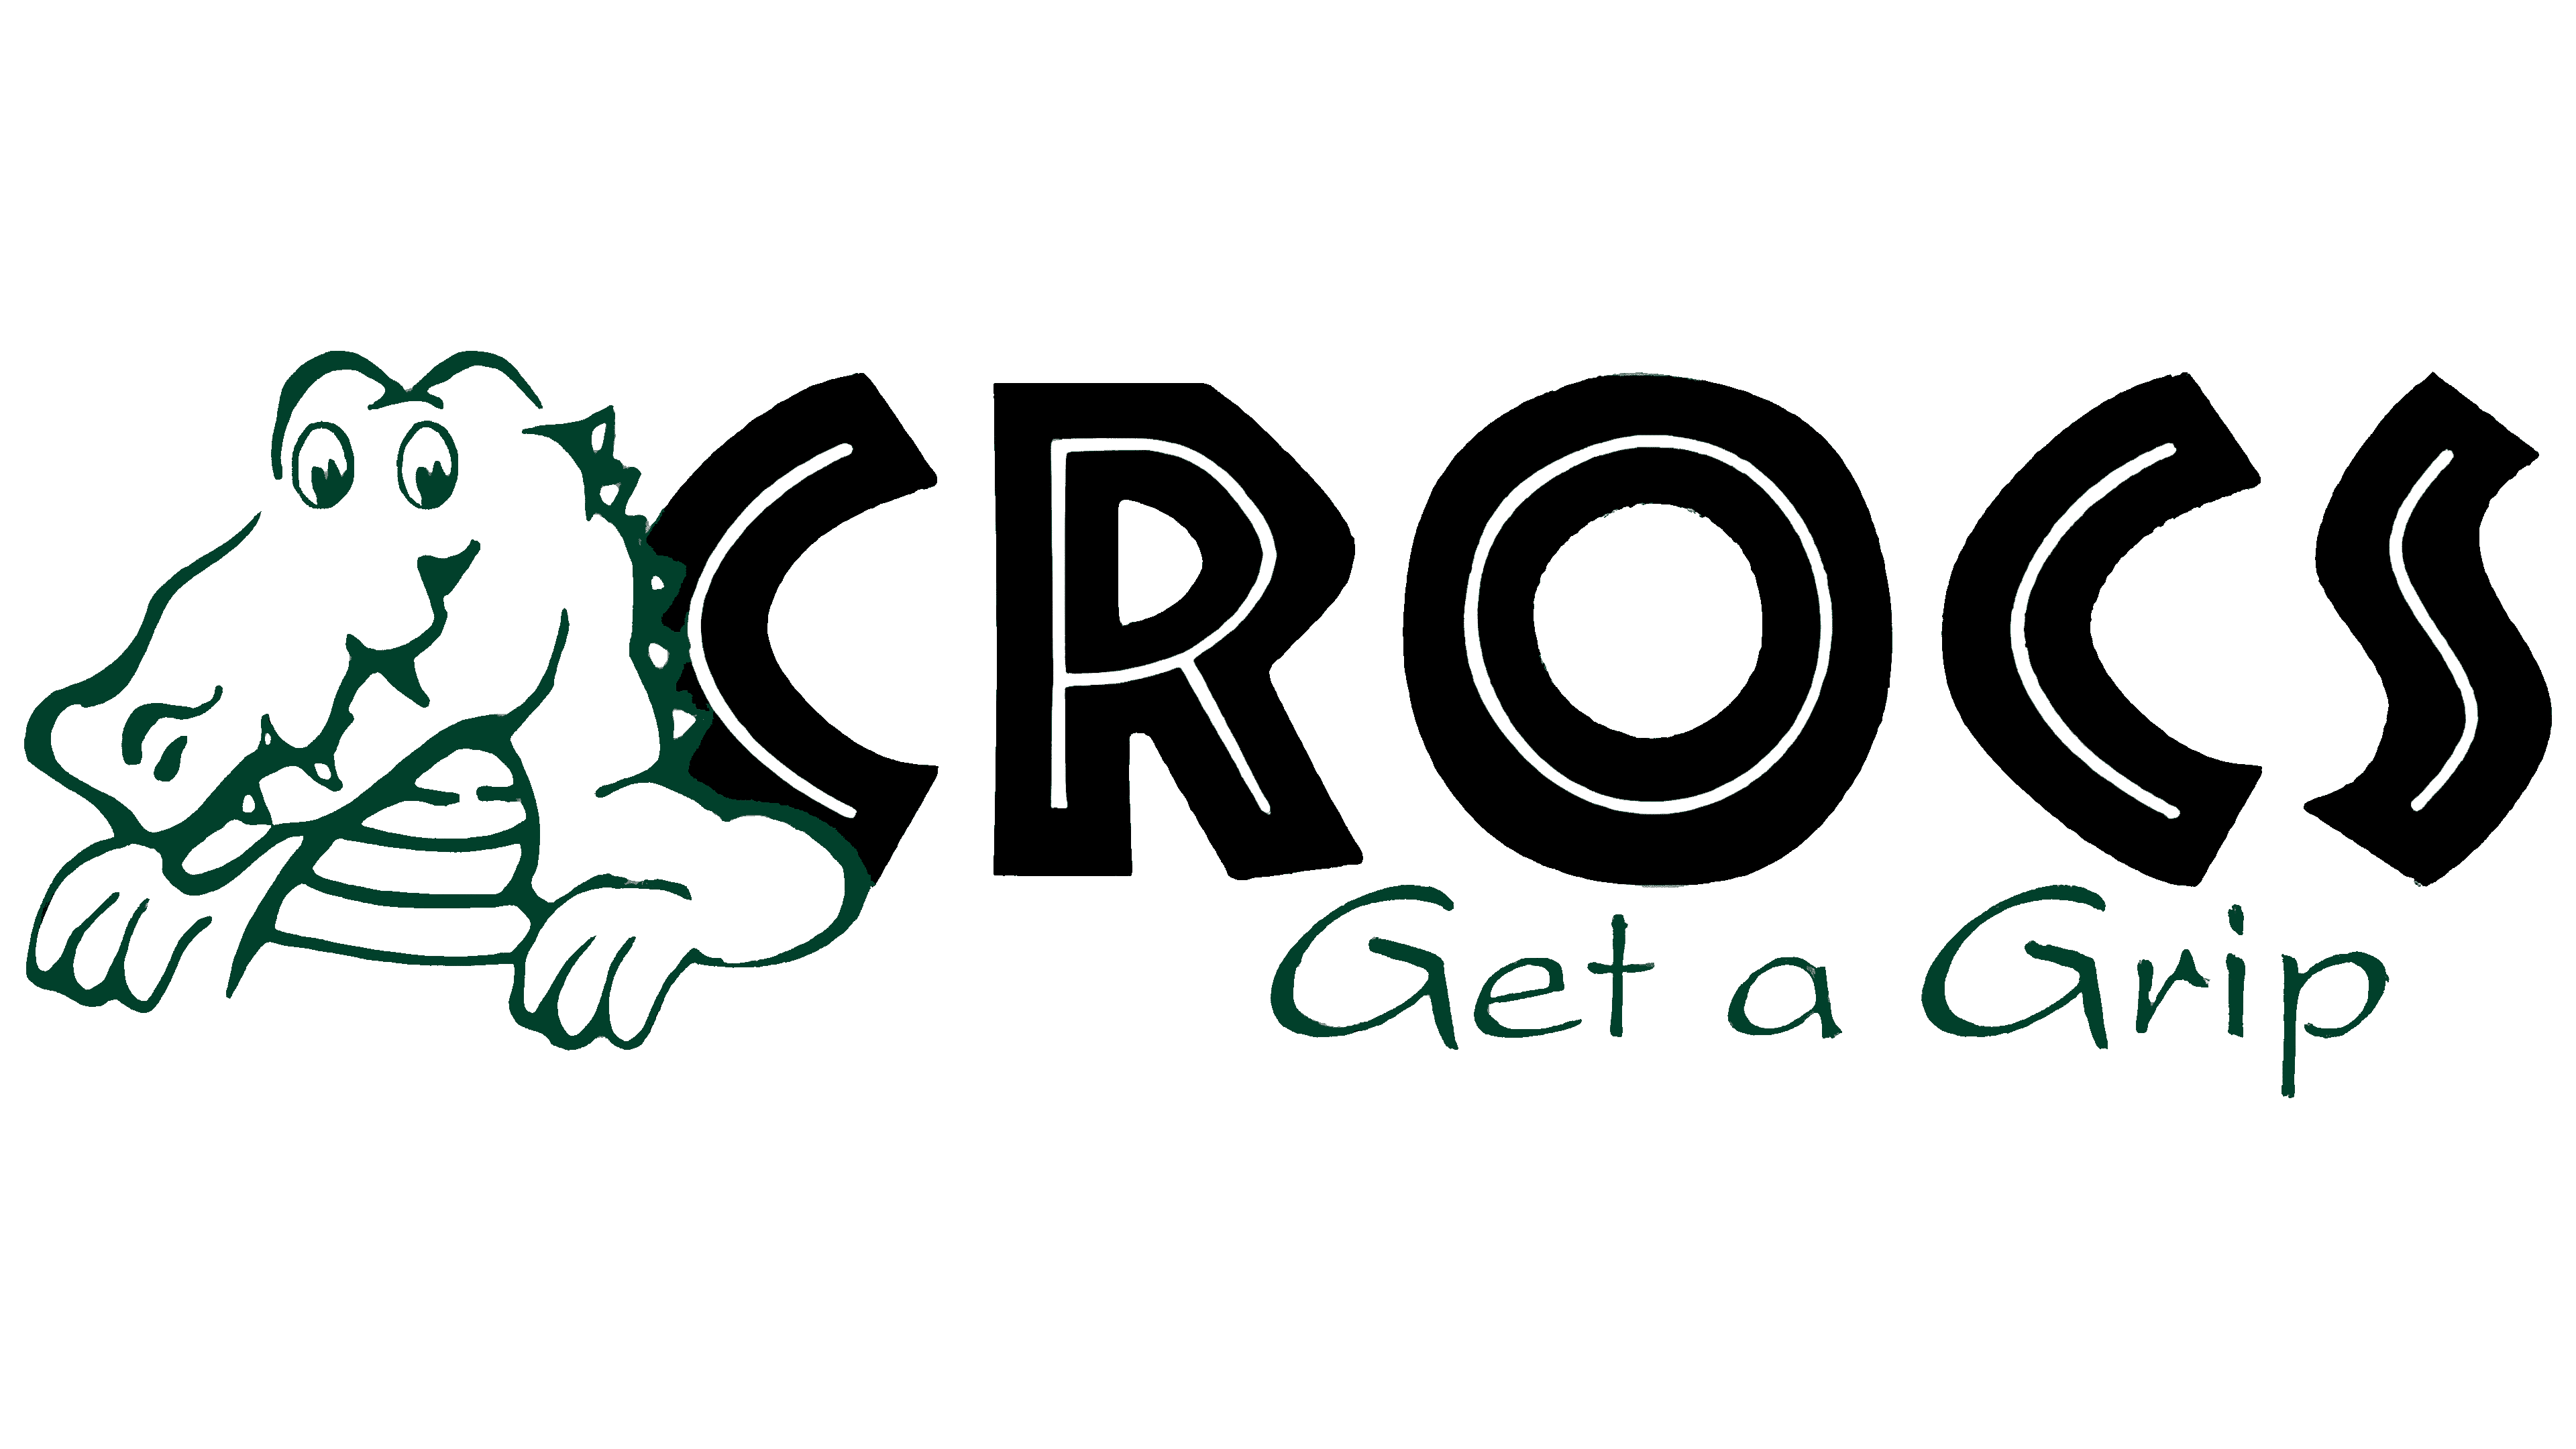 A faithful Soldier trace crocs logo Motivation Line of sight soft